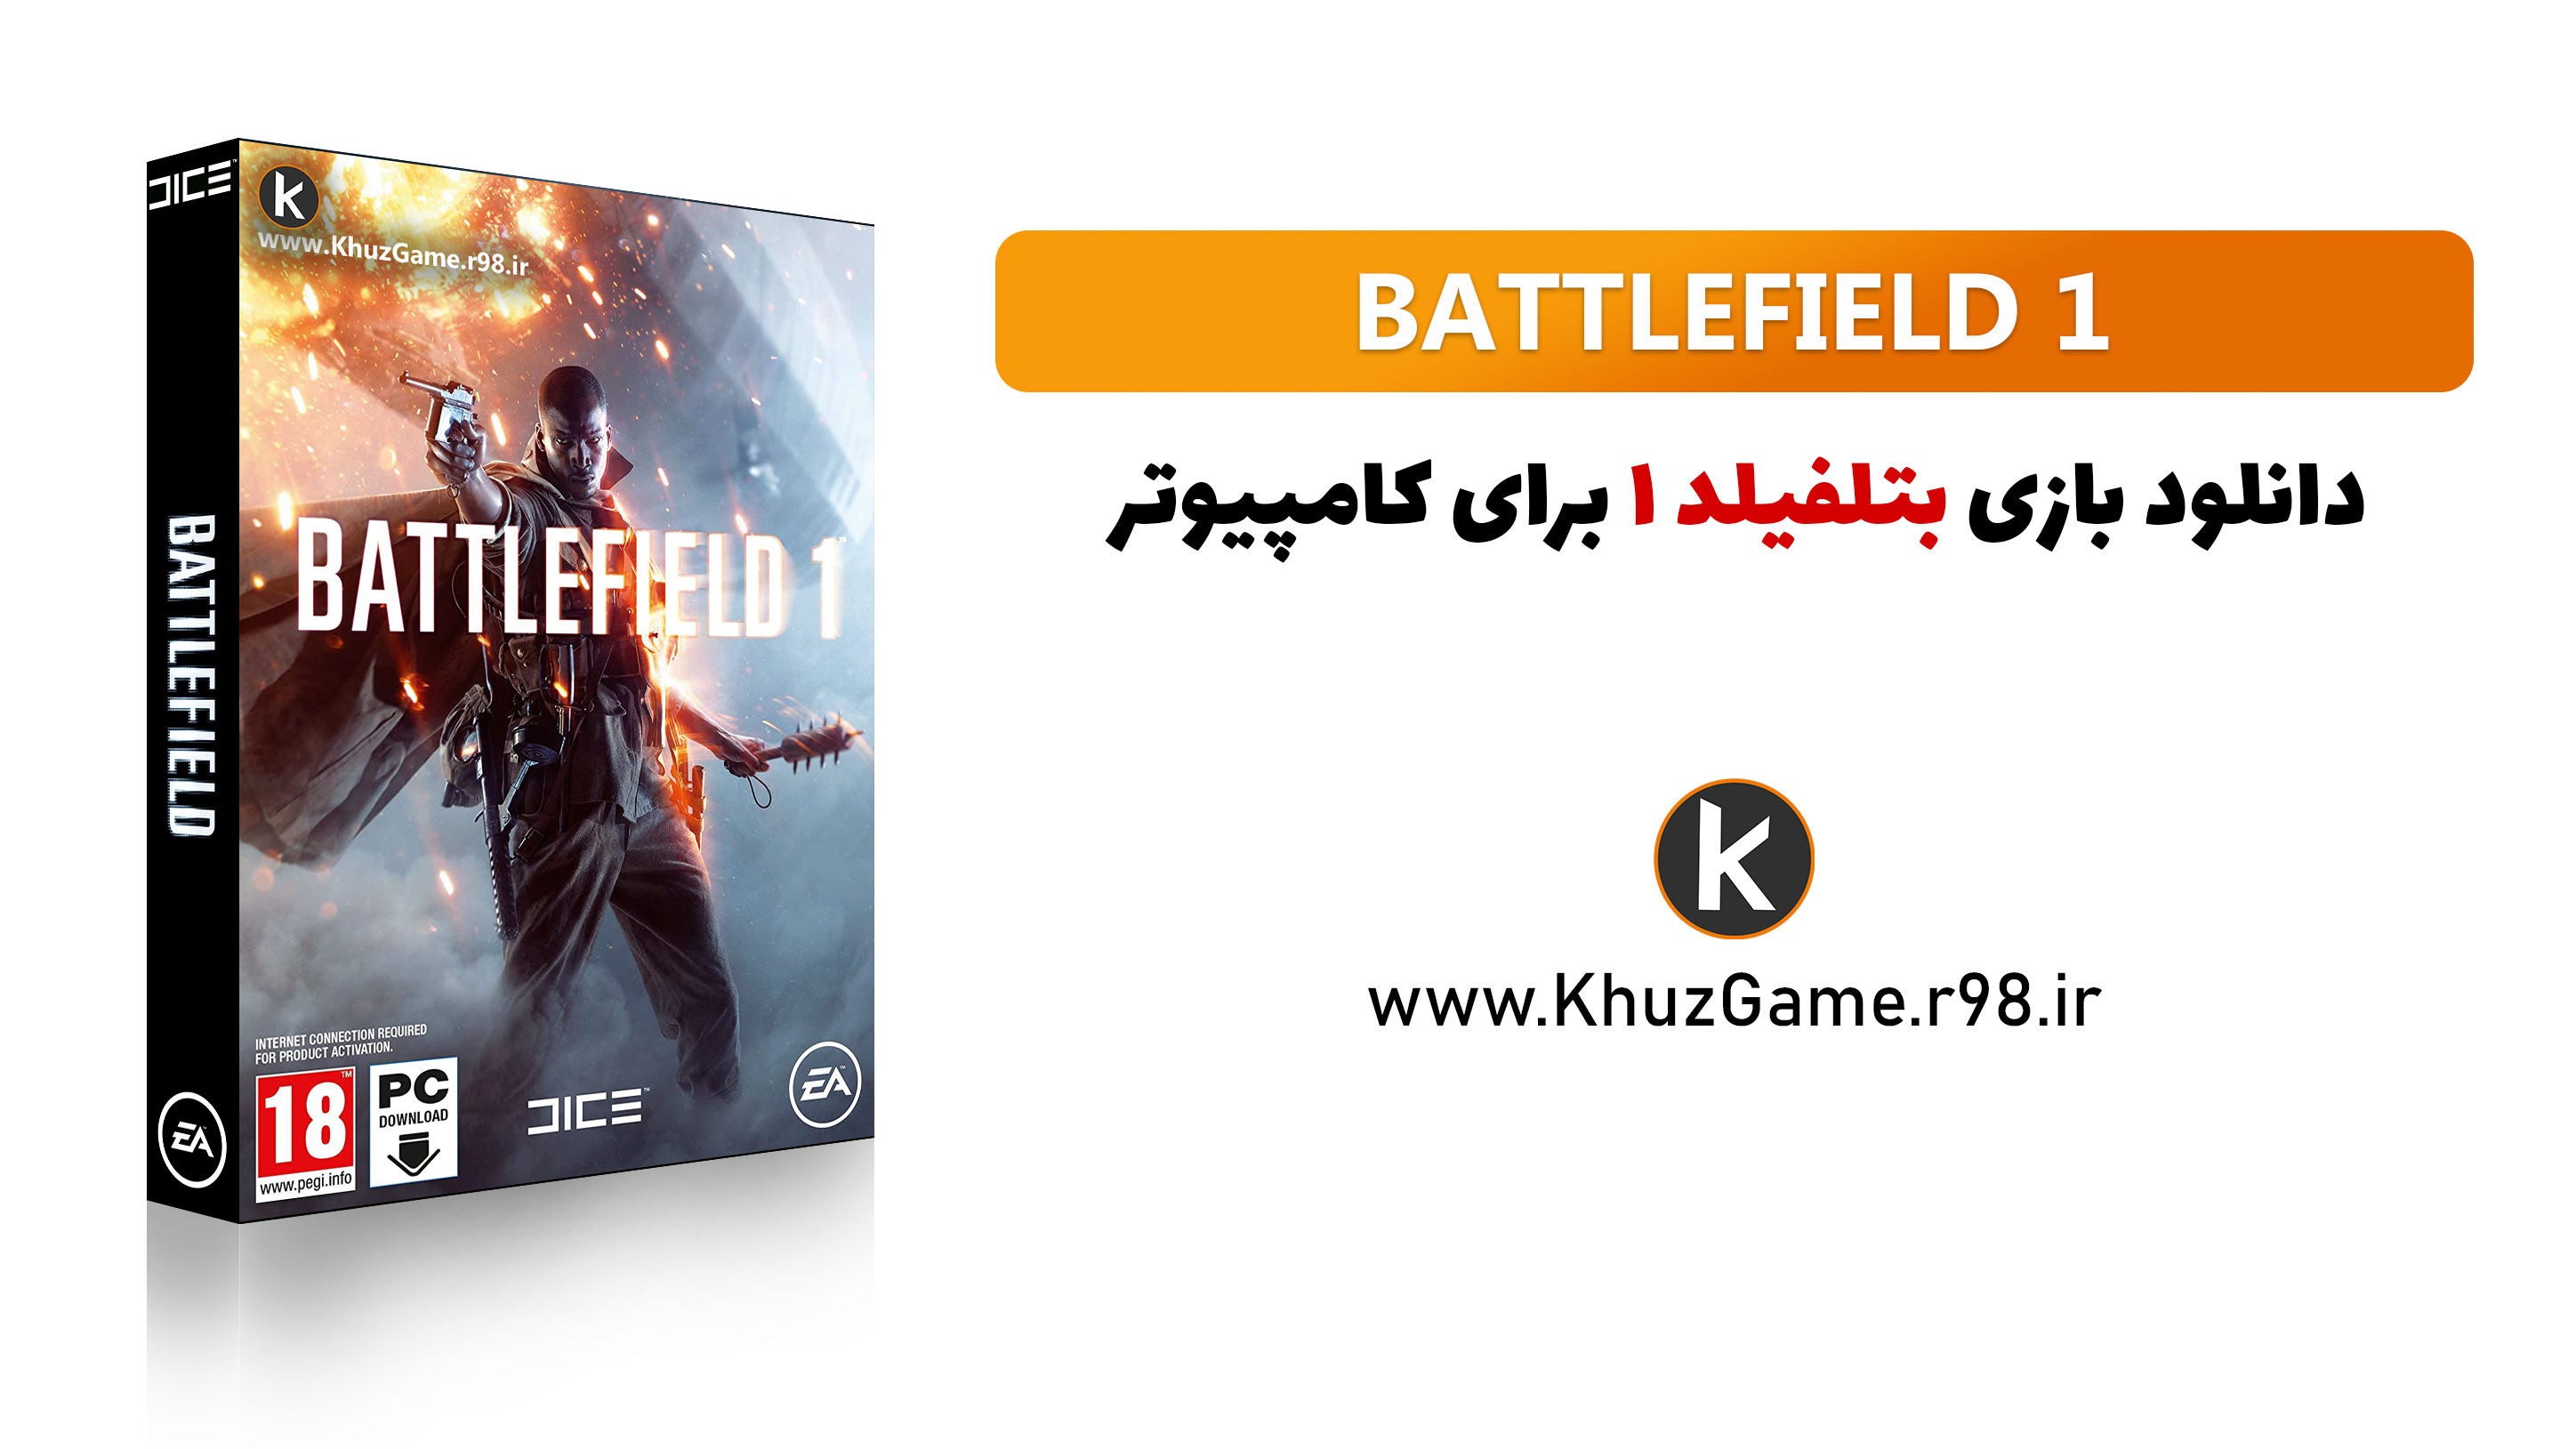 Battlefield 1 free for PC | دانلوود بازی بتلفیلد 1 برای کامپیوتر